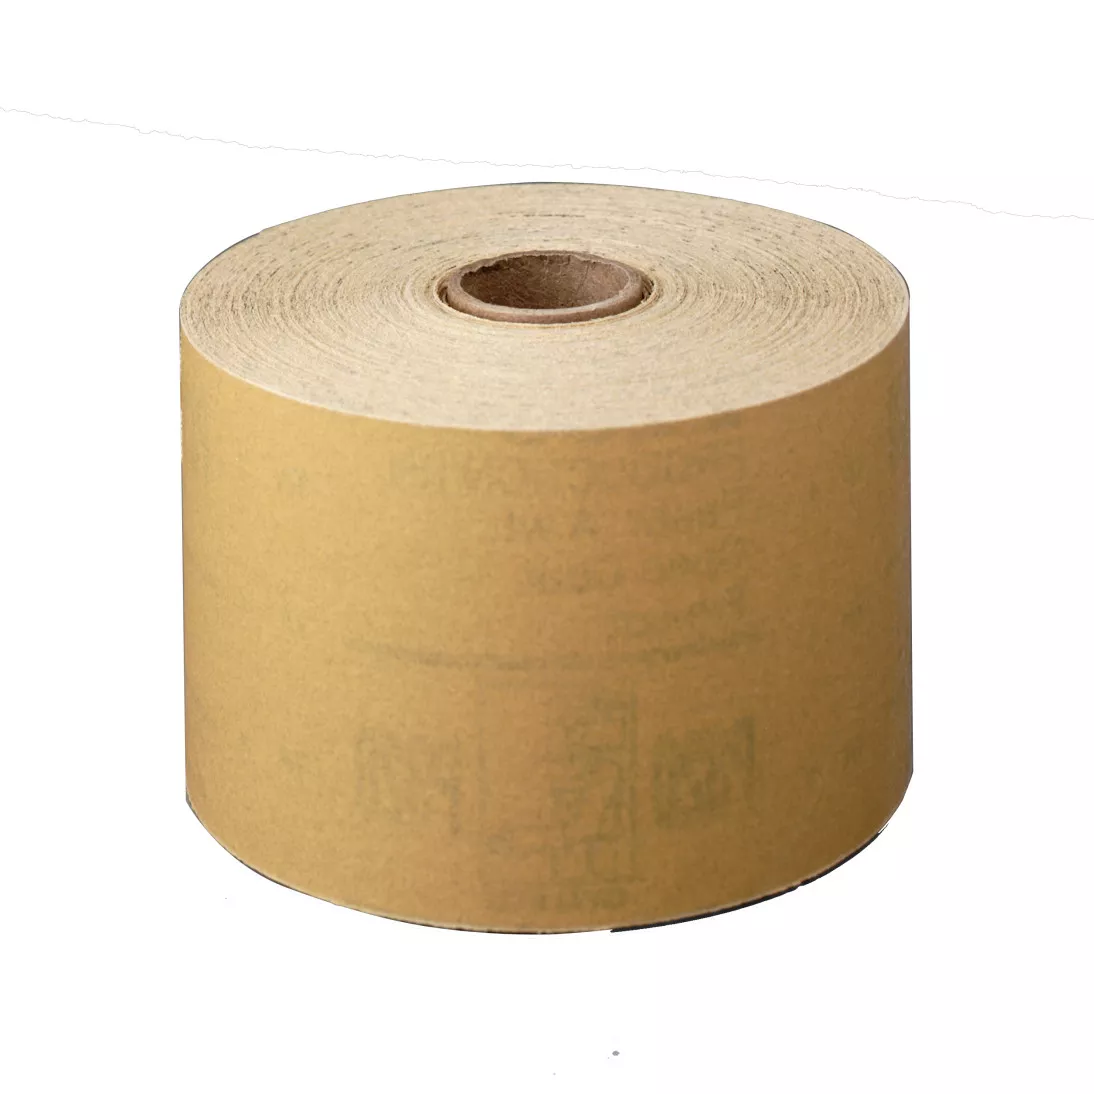 3M™ Stikit™ Gold Sheet Roll, 02599, P80, 2-3/4 in x 25 yd, 10 rolls per
case